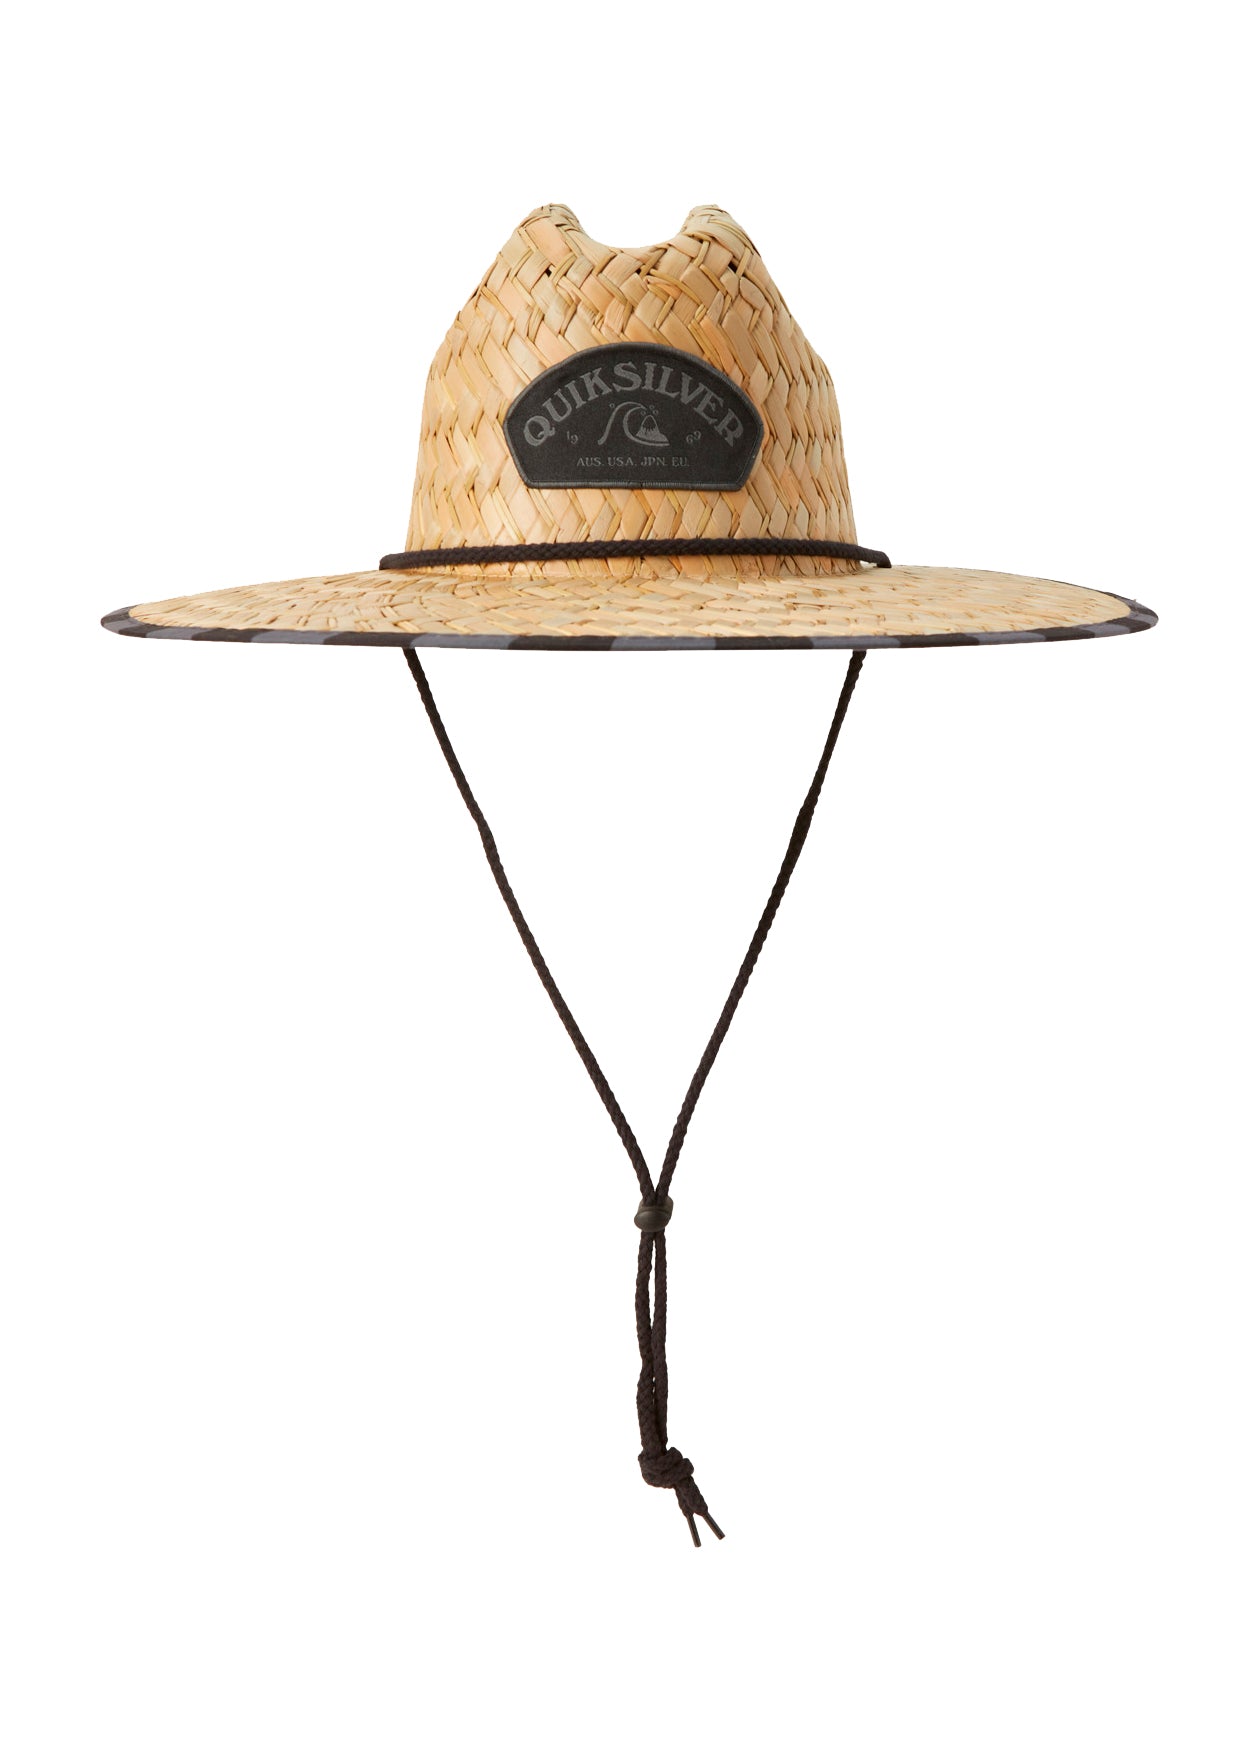 Quiksilver Outsider Straw Lifeguard Hat XKKS L/XL